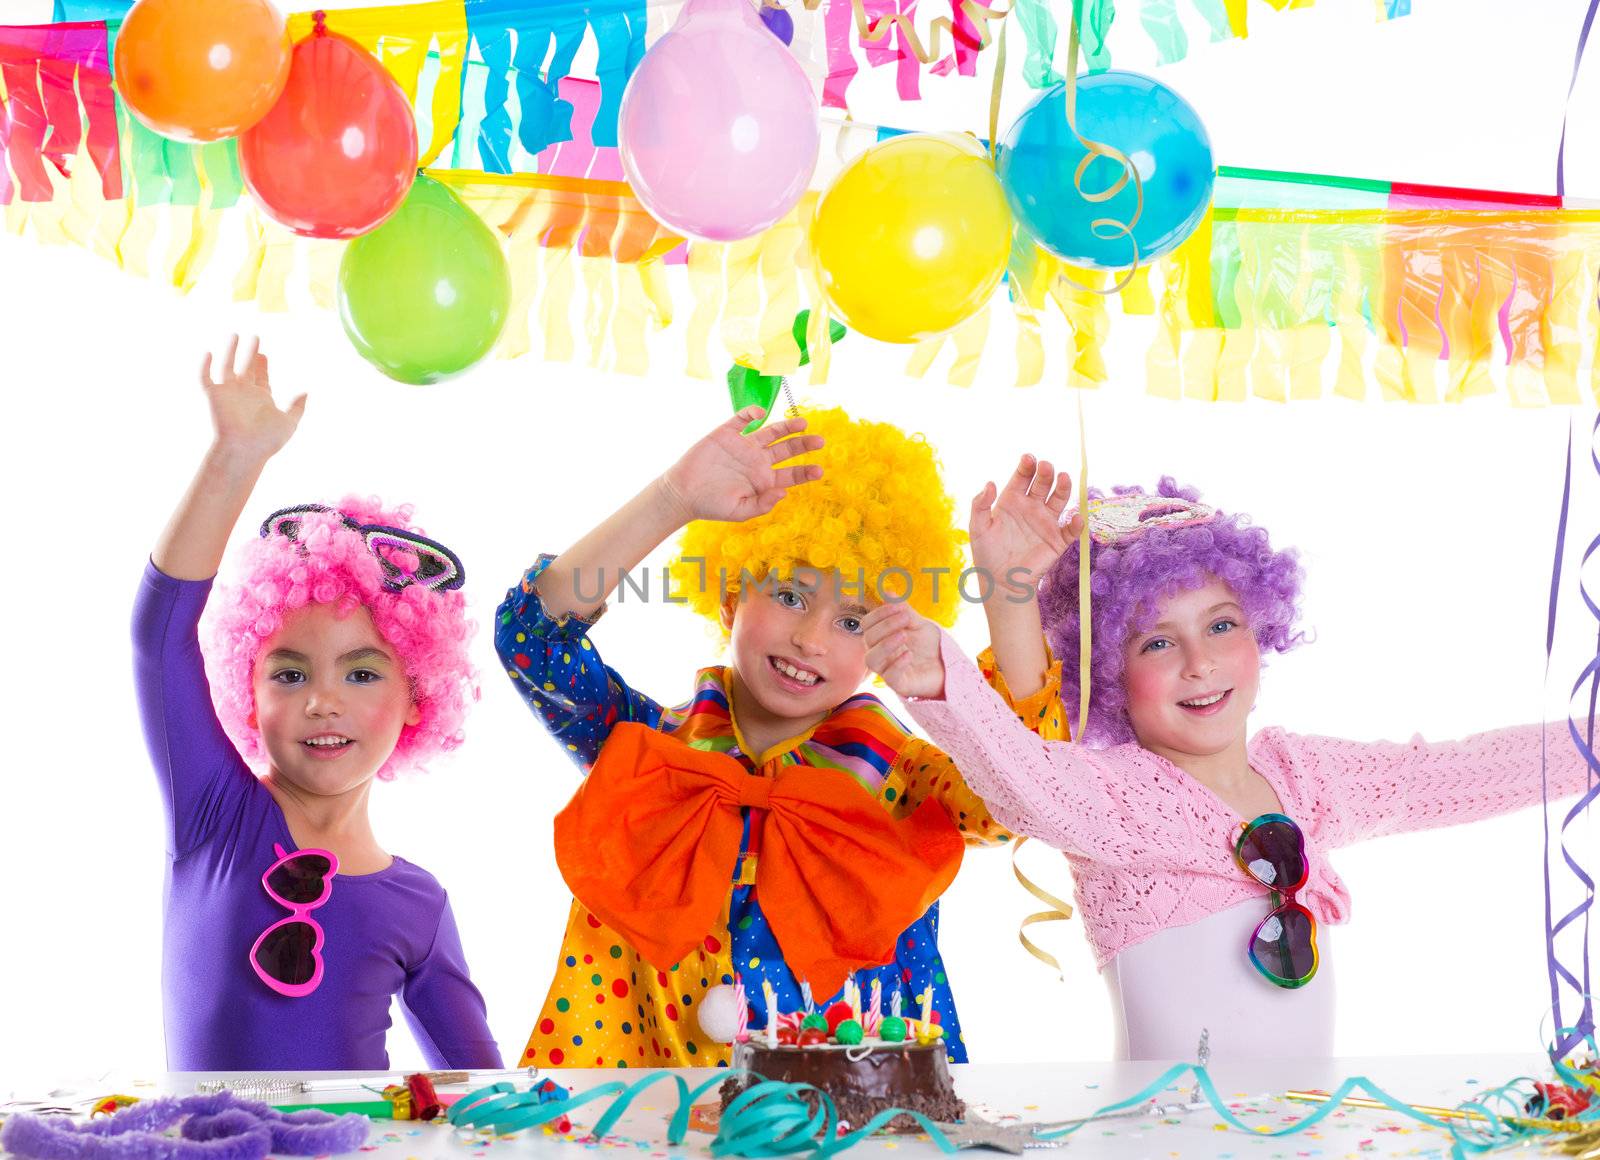 Children happy birthday party with clown wigs by lunamarina